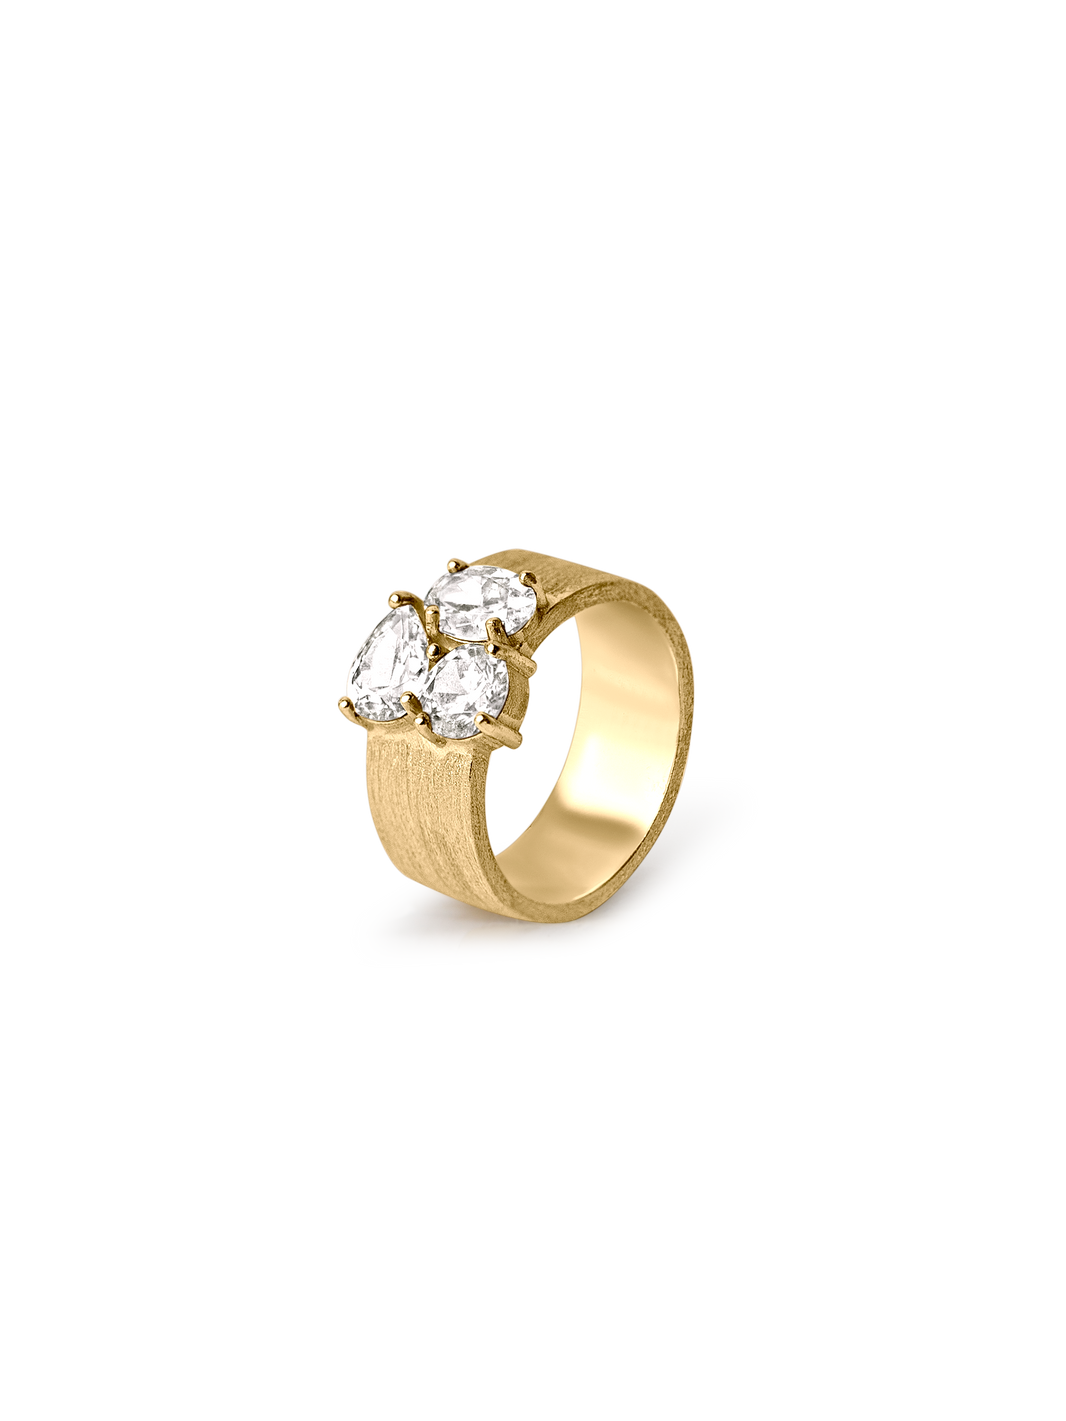 Grace Zirconia Ring by Felicia Wedin 18k gold plated brass